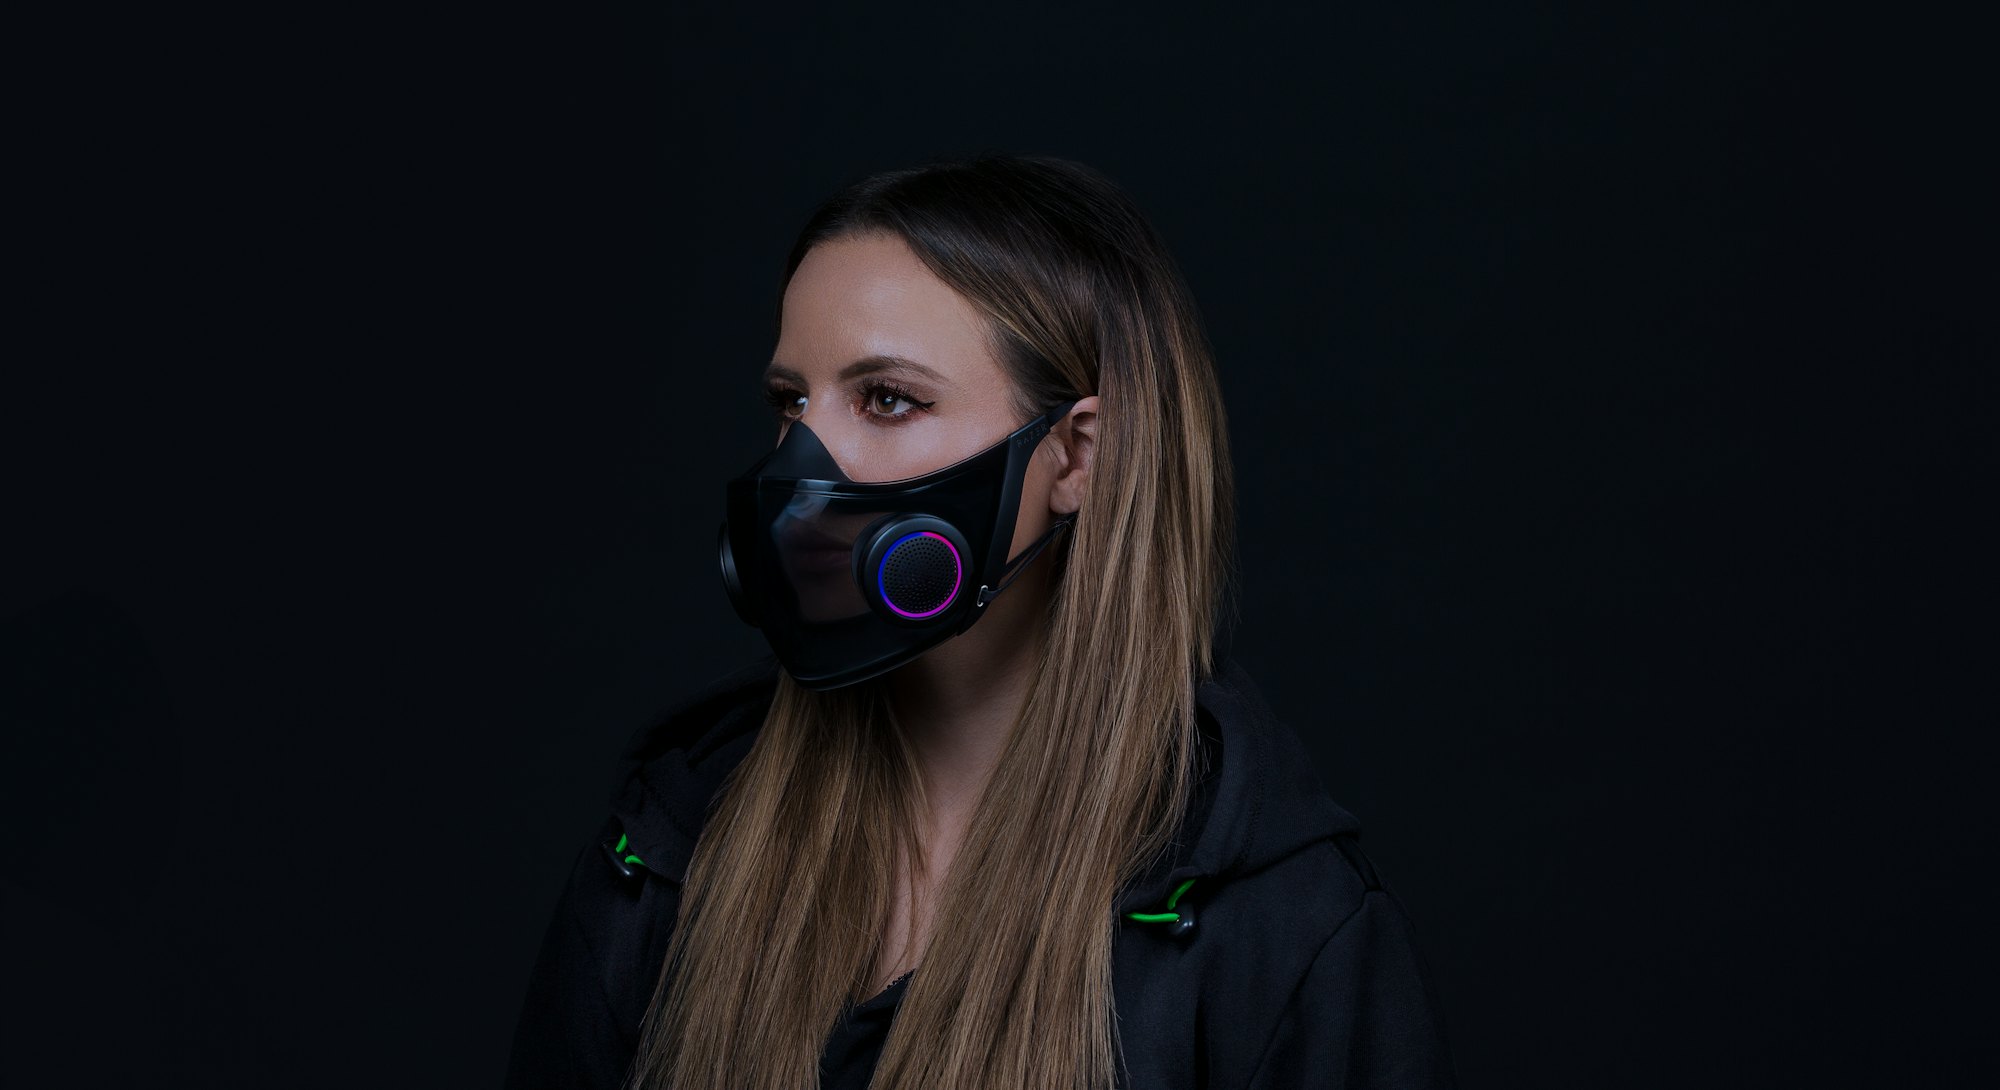 Razer Project Hazel N95 smart respirator mask